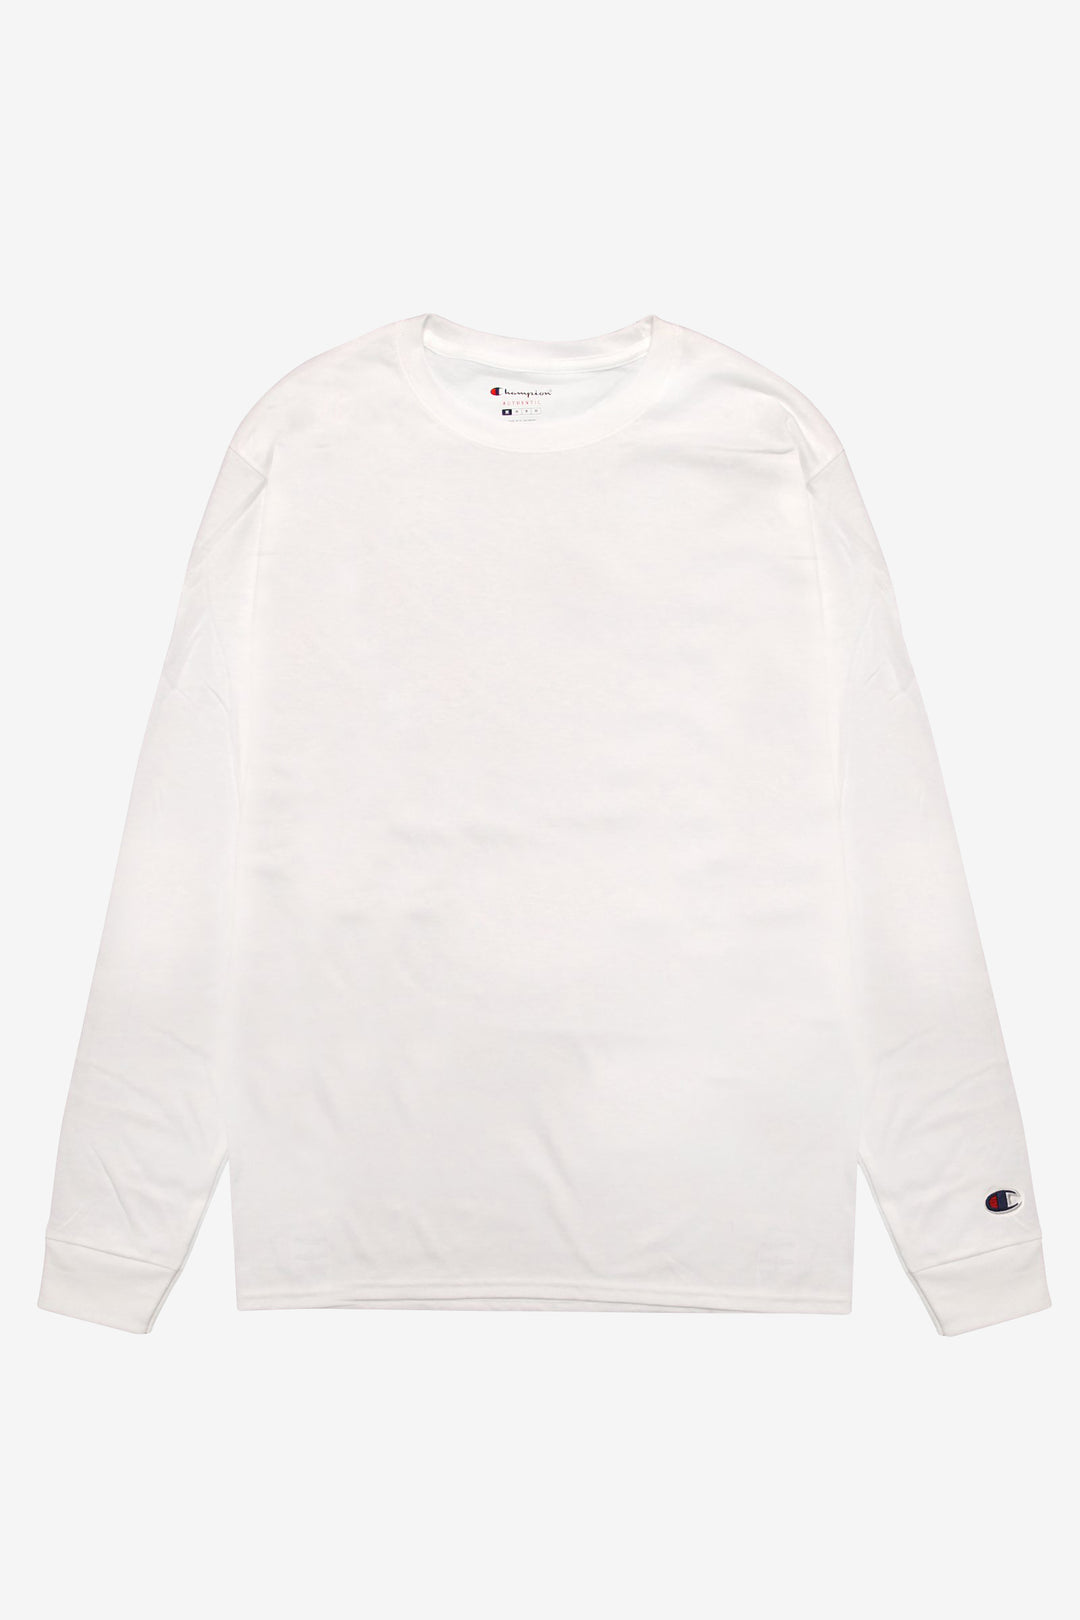 Champion - 6oz Long Sleeve T-Shirt - White